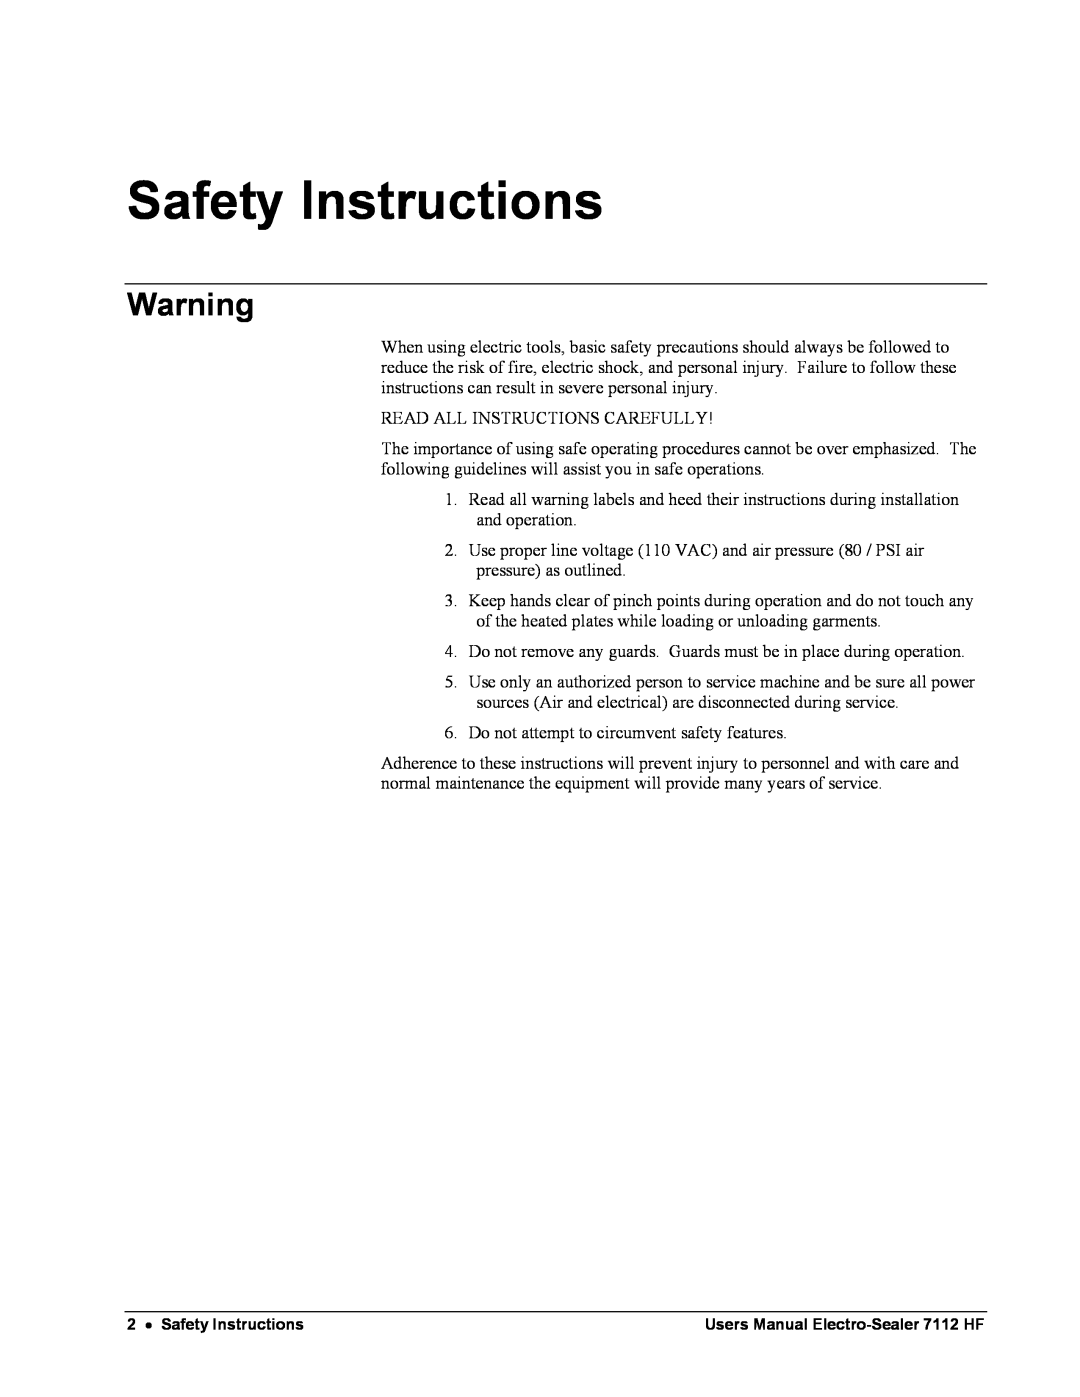 Avery 7112 HF user manual Safety Instructions 